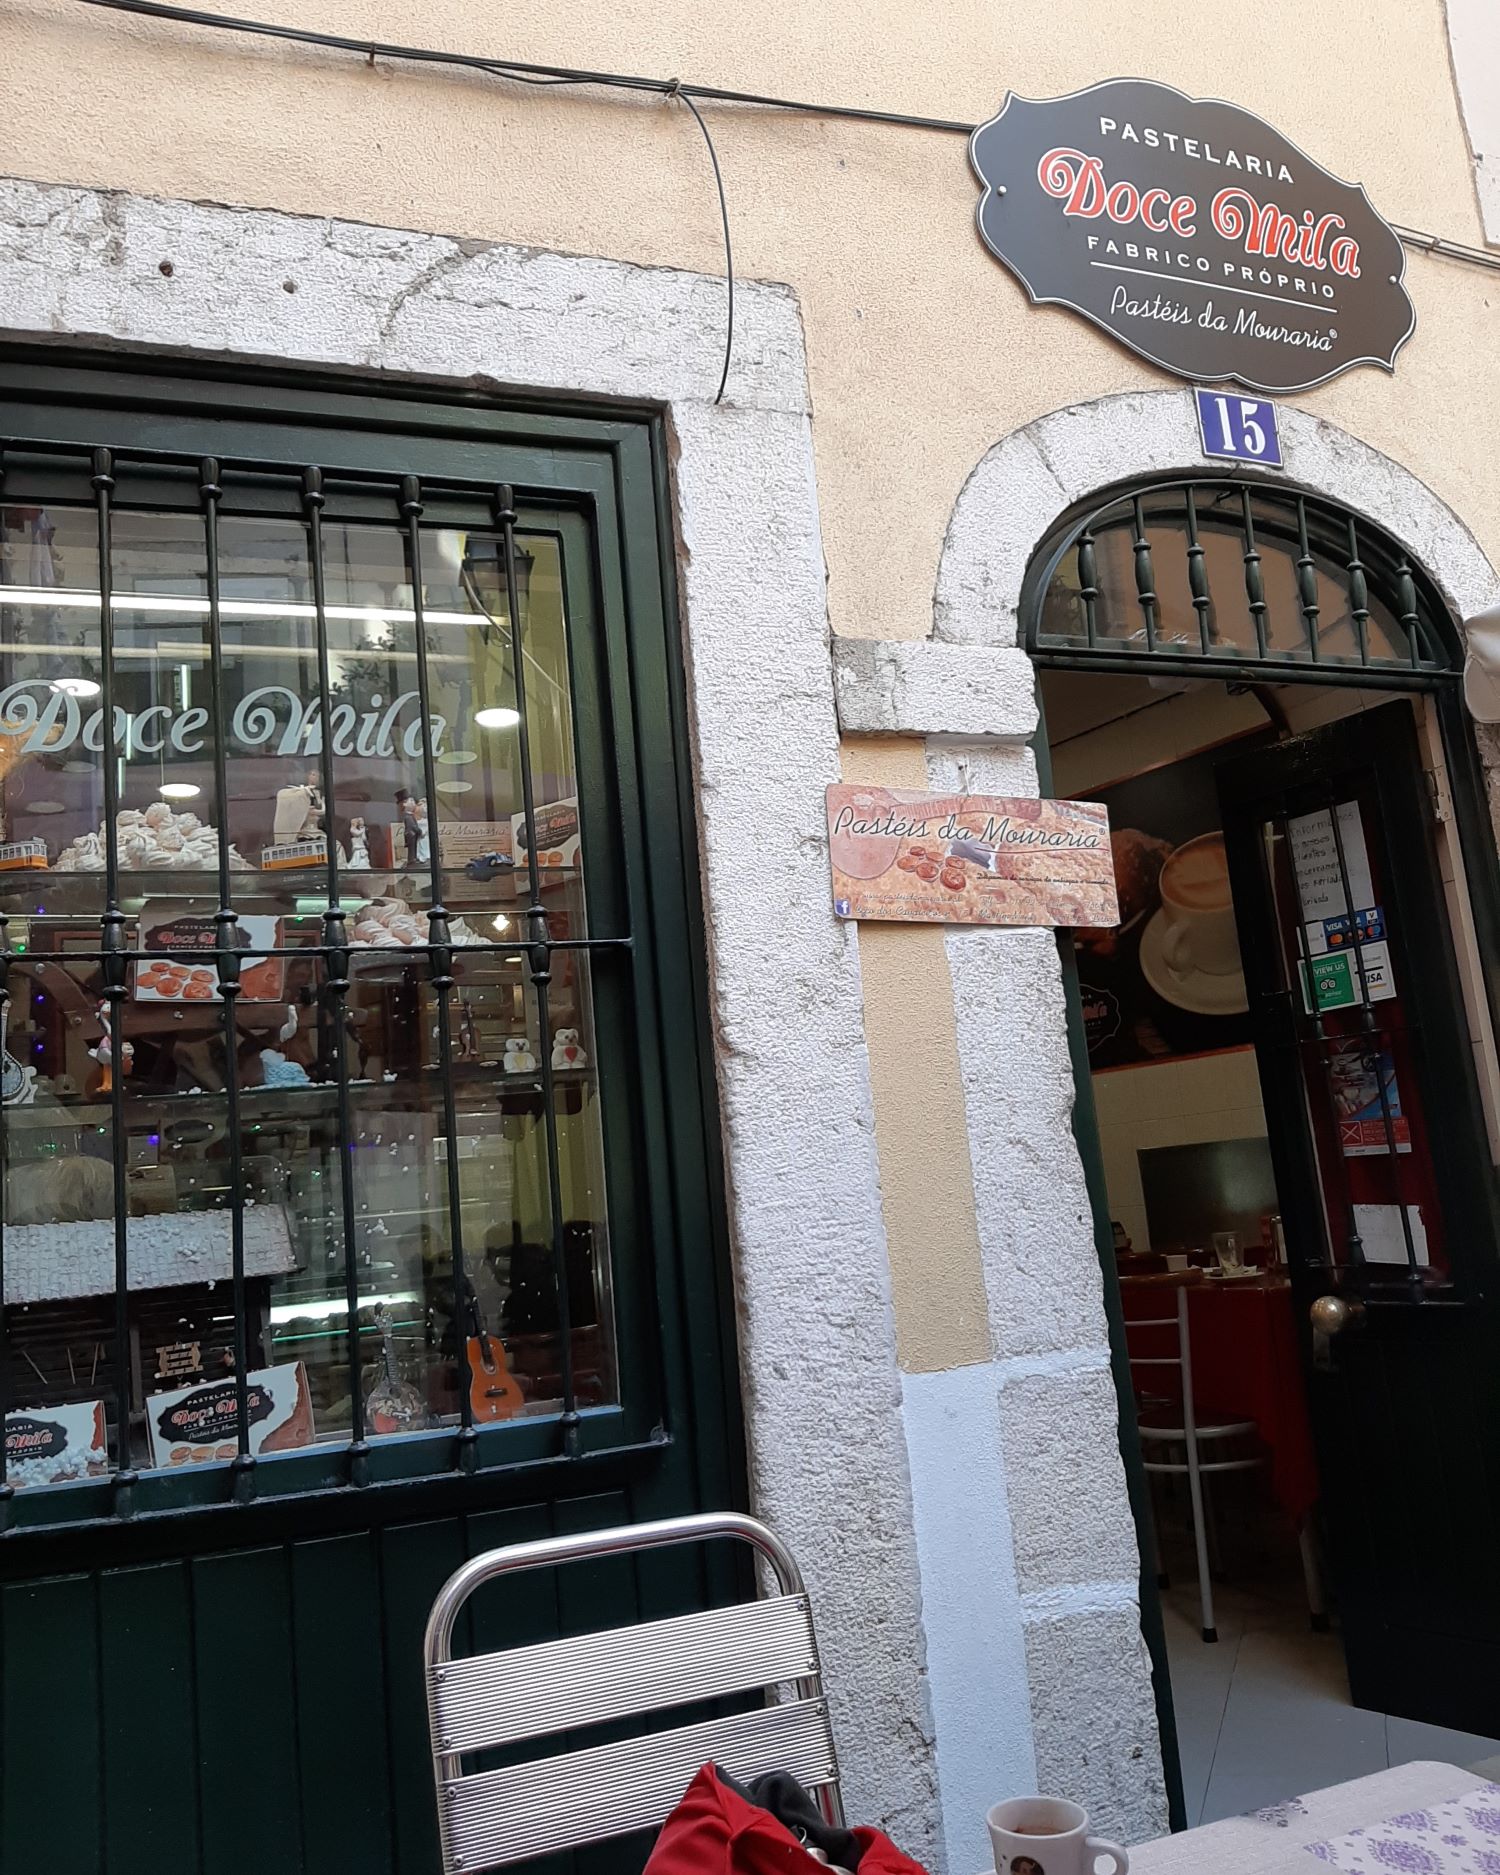 Local cafes serve freshly made Pastel de Nata